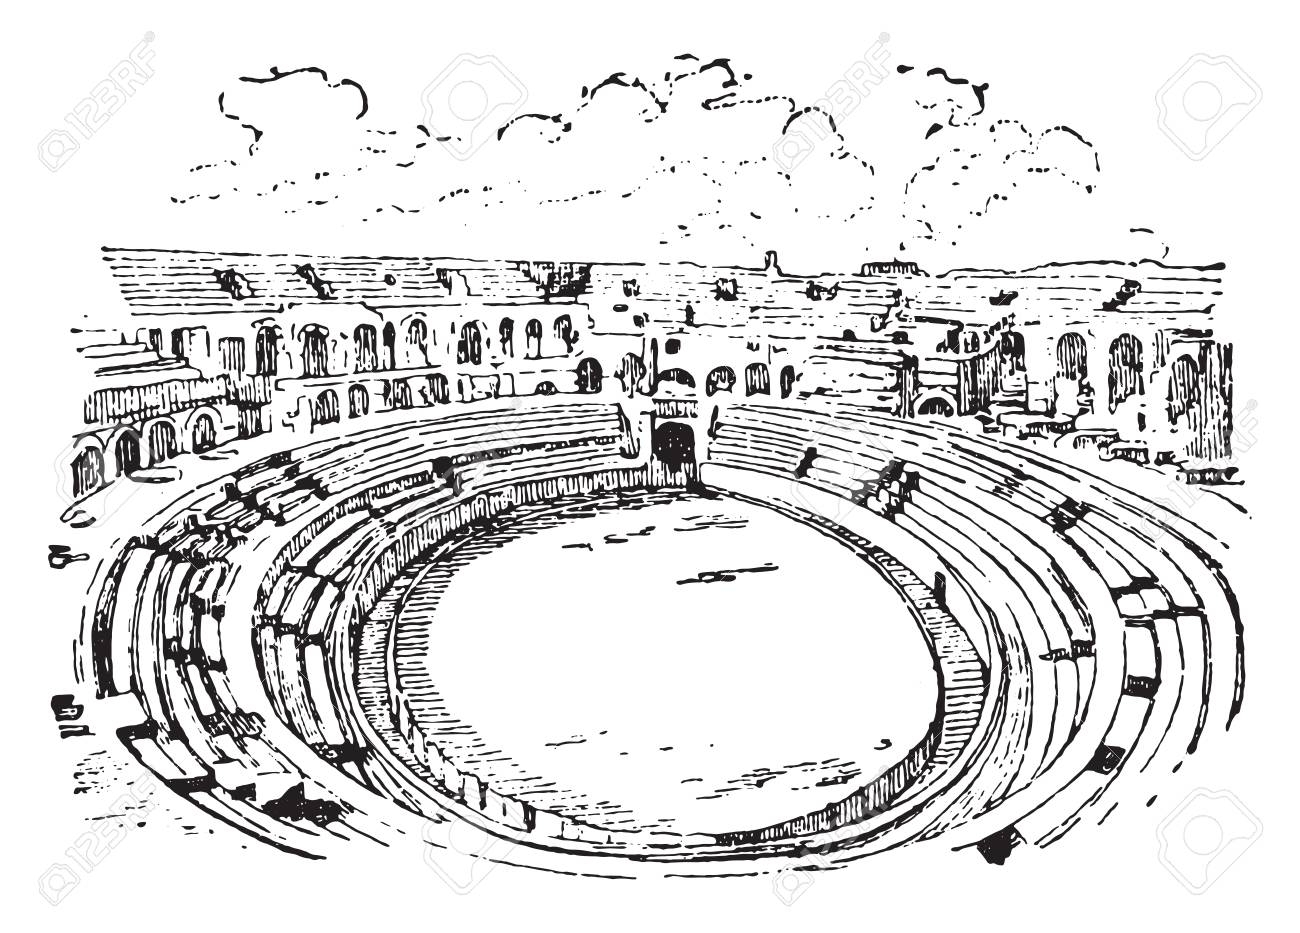 Афинский театр рисунок 5 класс